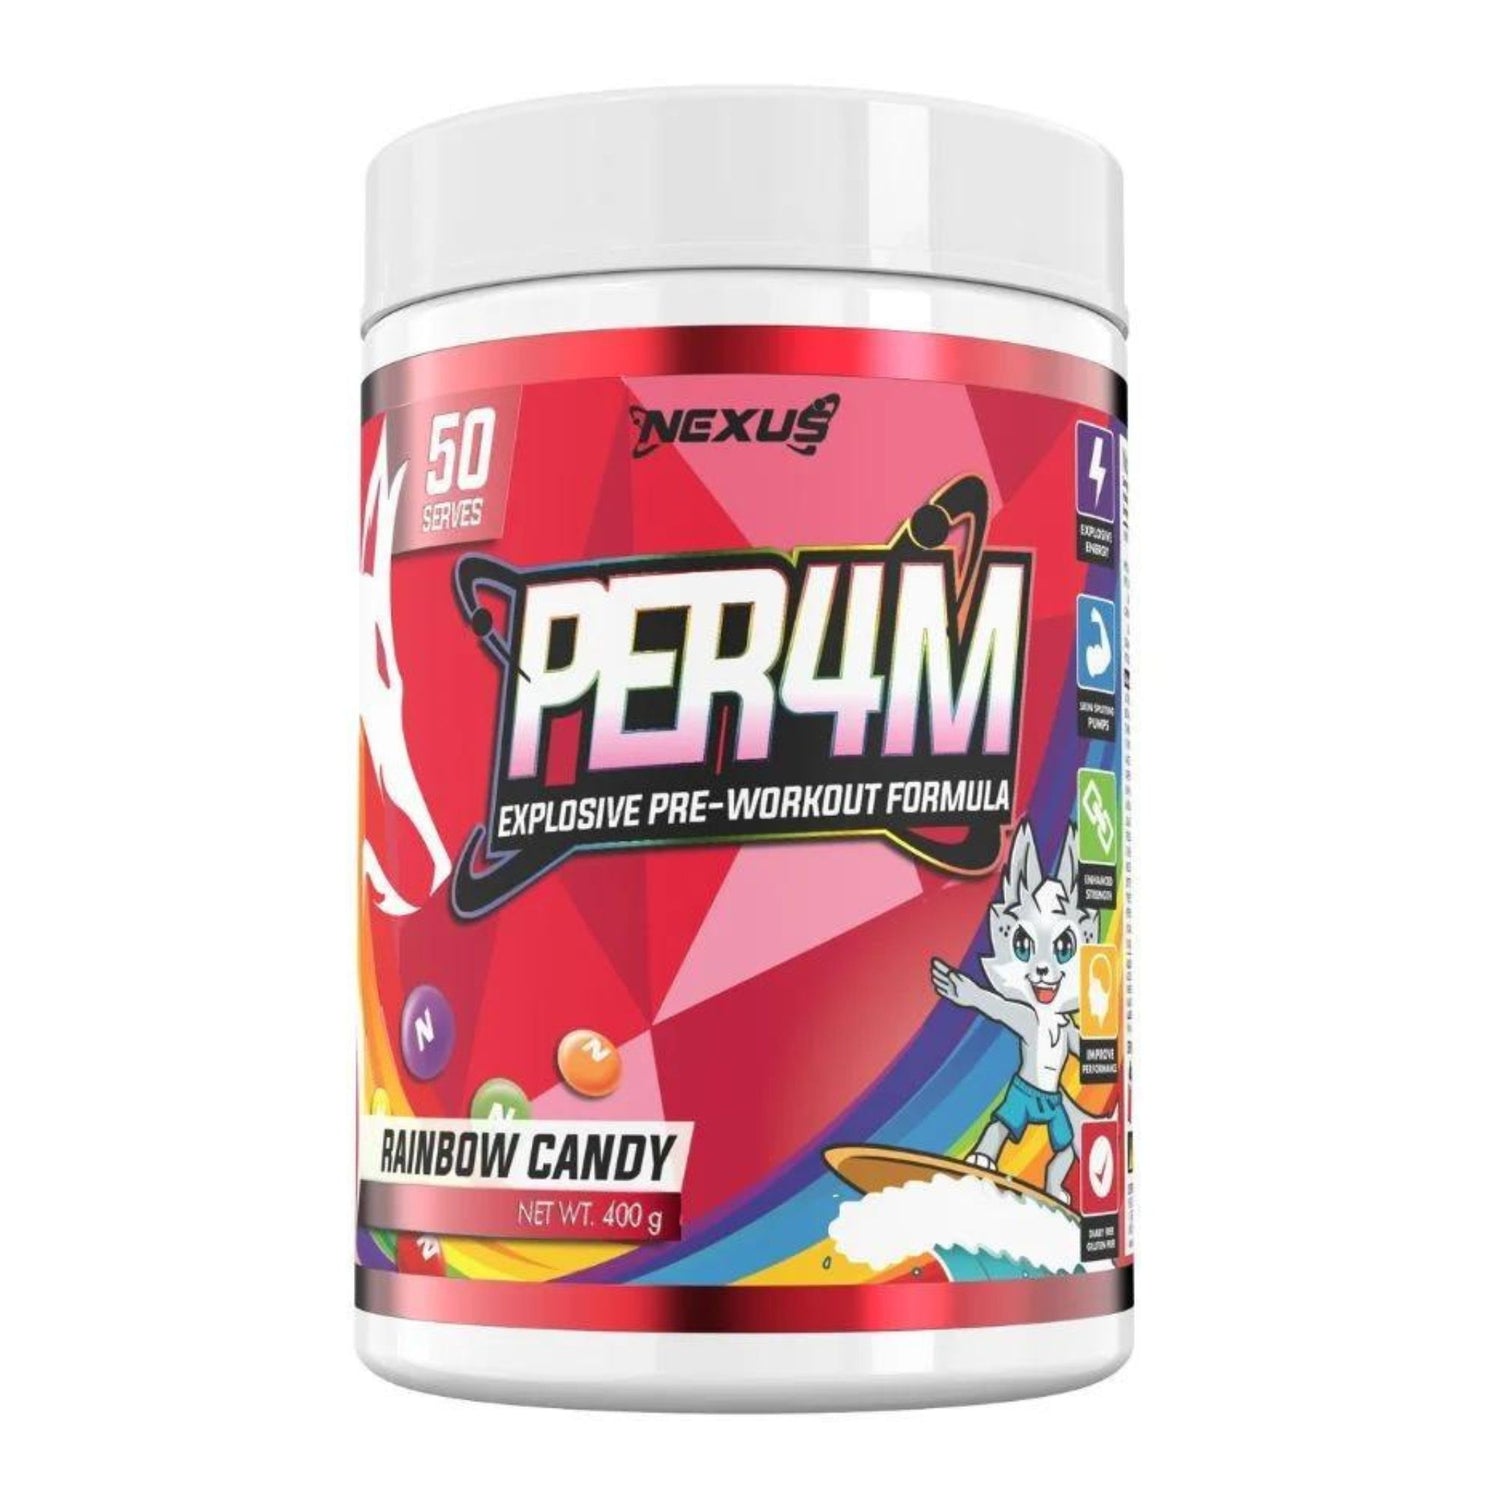 Nexus PER4M - Rainbow Candy